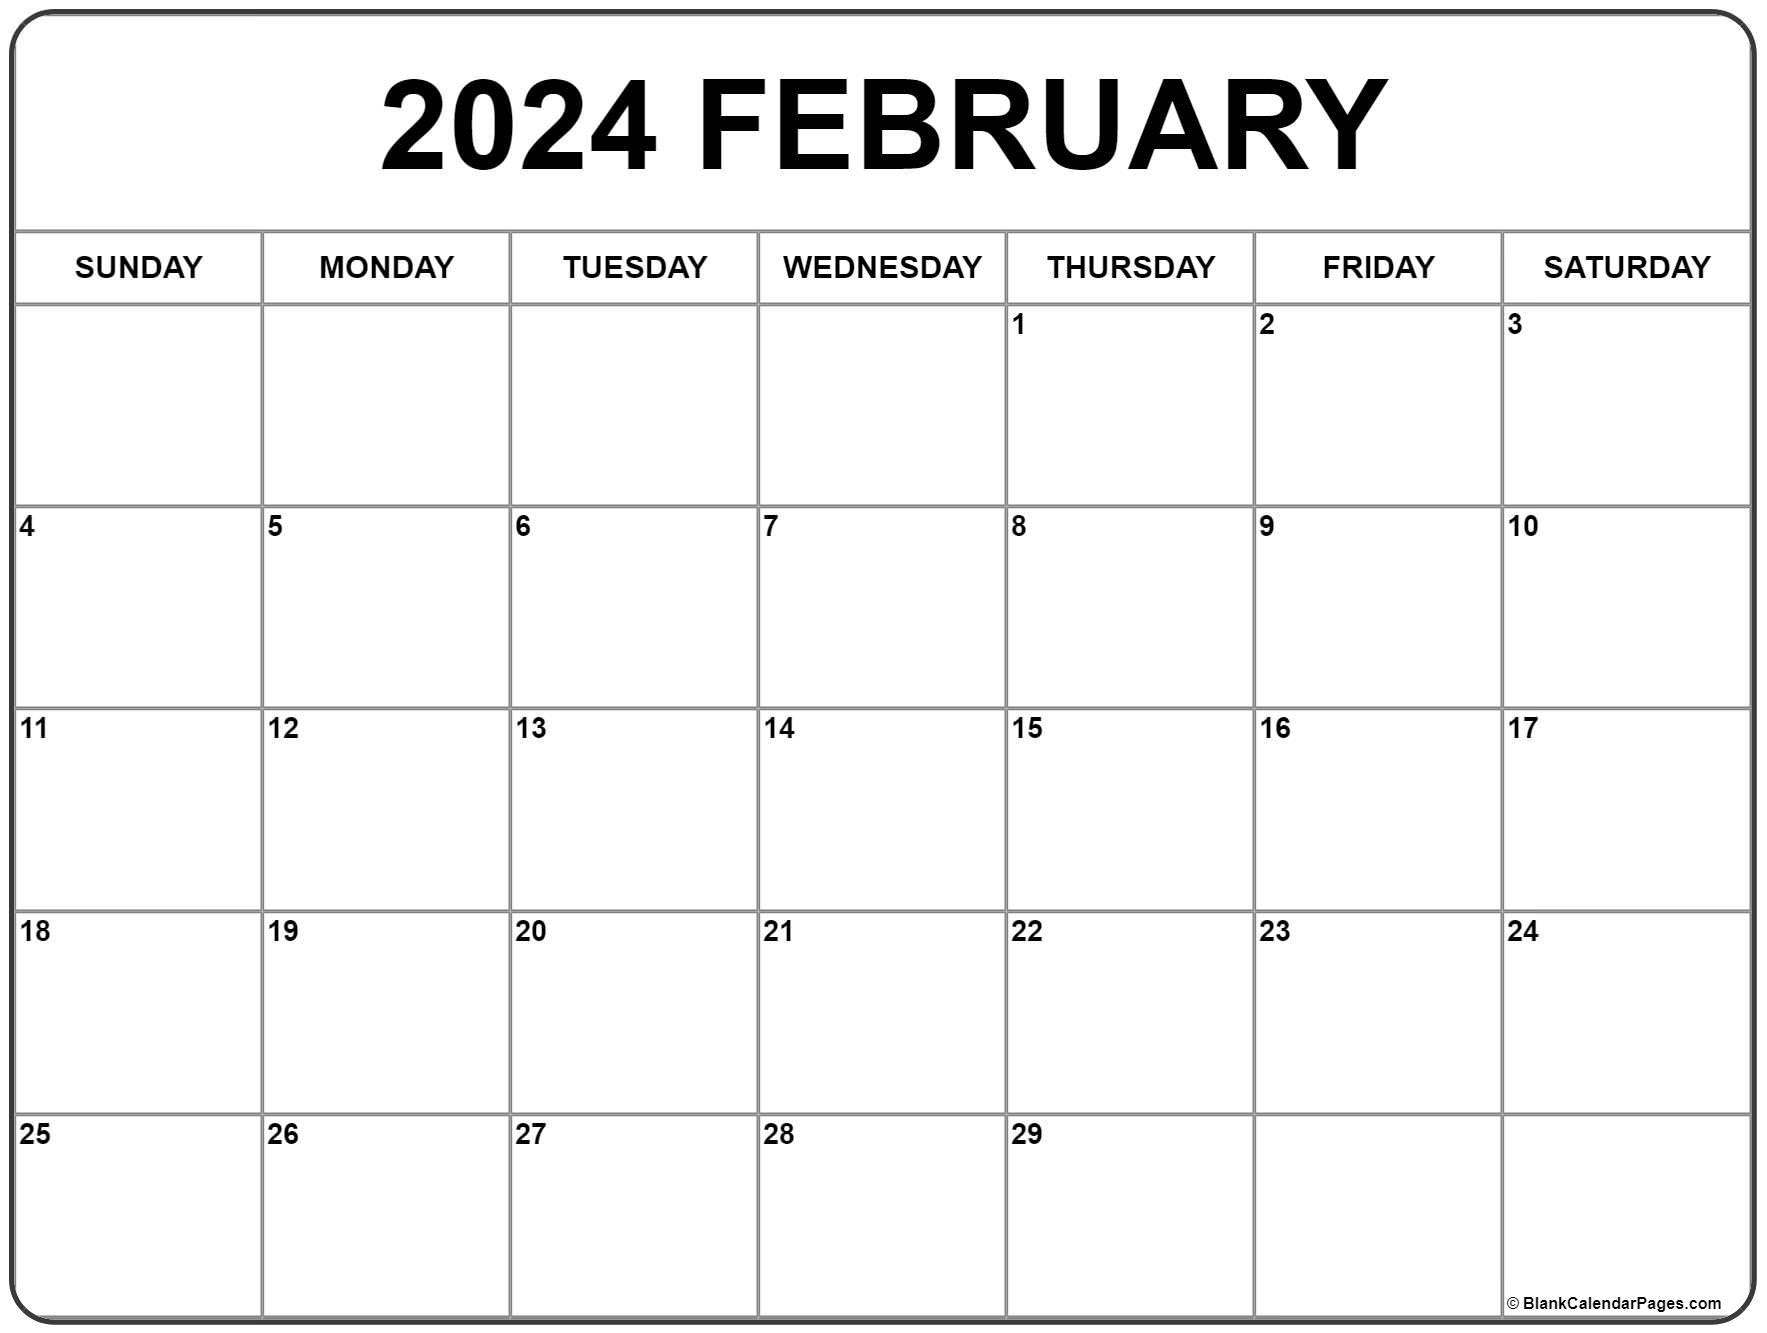 Printable February 2021 Calendar February 2021 calendar | free printable monthly calendars